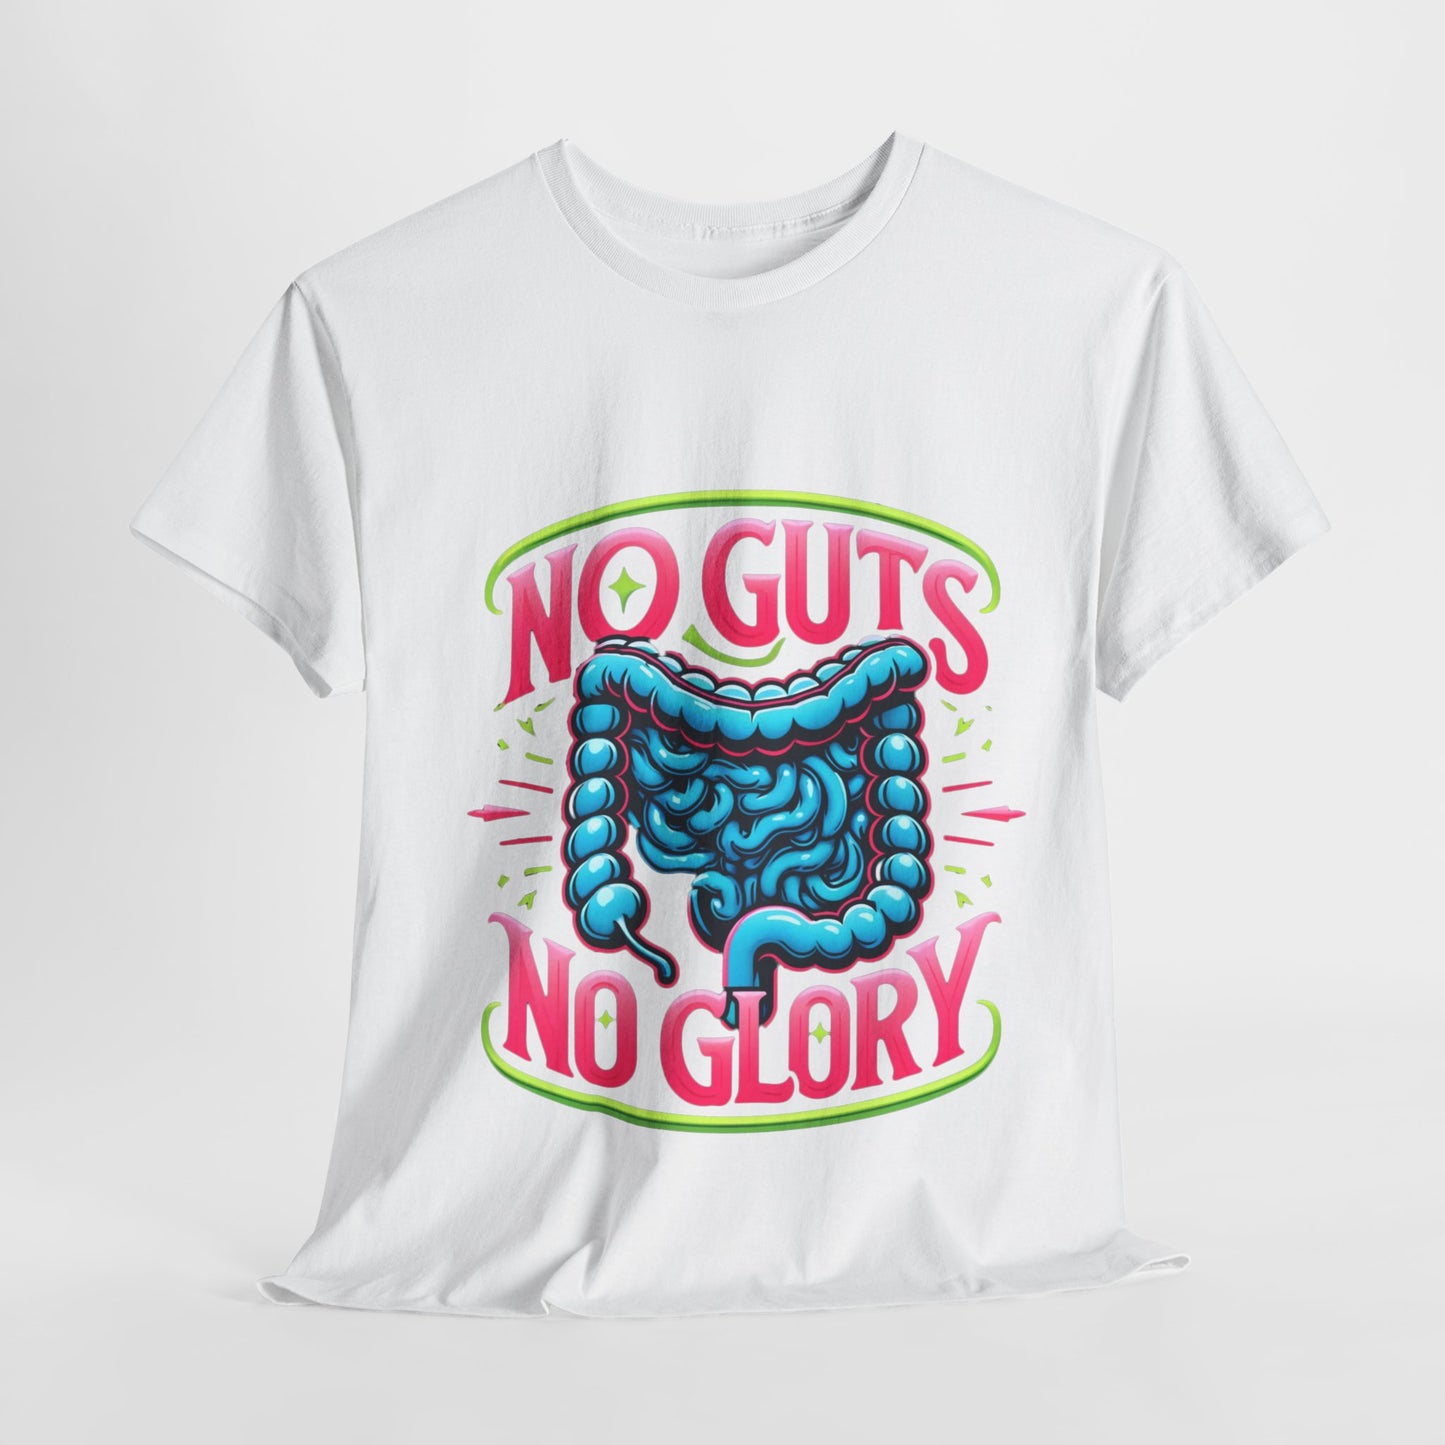 Y.M.L.Y. "No Guts No Glory" Motivational T-Shirts Inspirational T-Shirt Urban Wear Street Wear Classic Comfort Tee